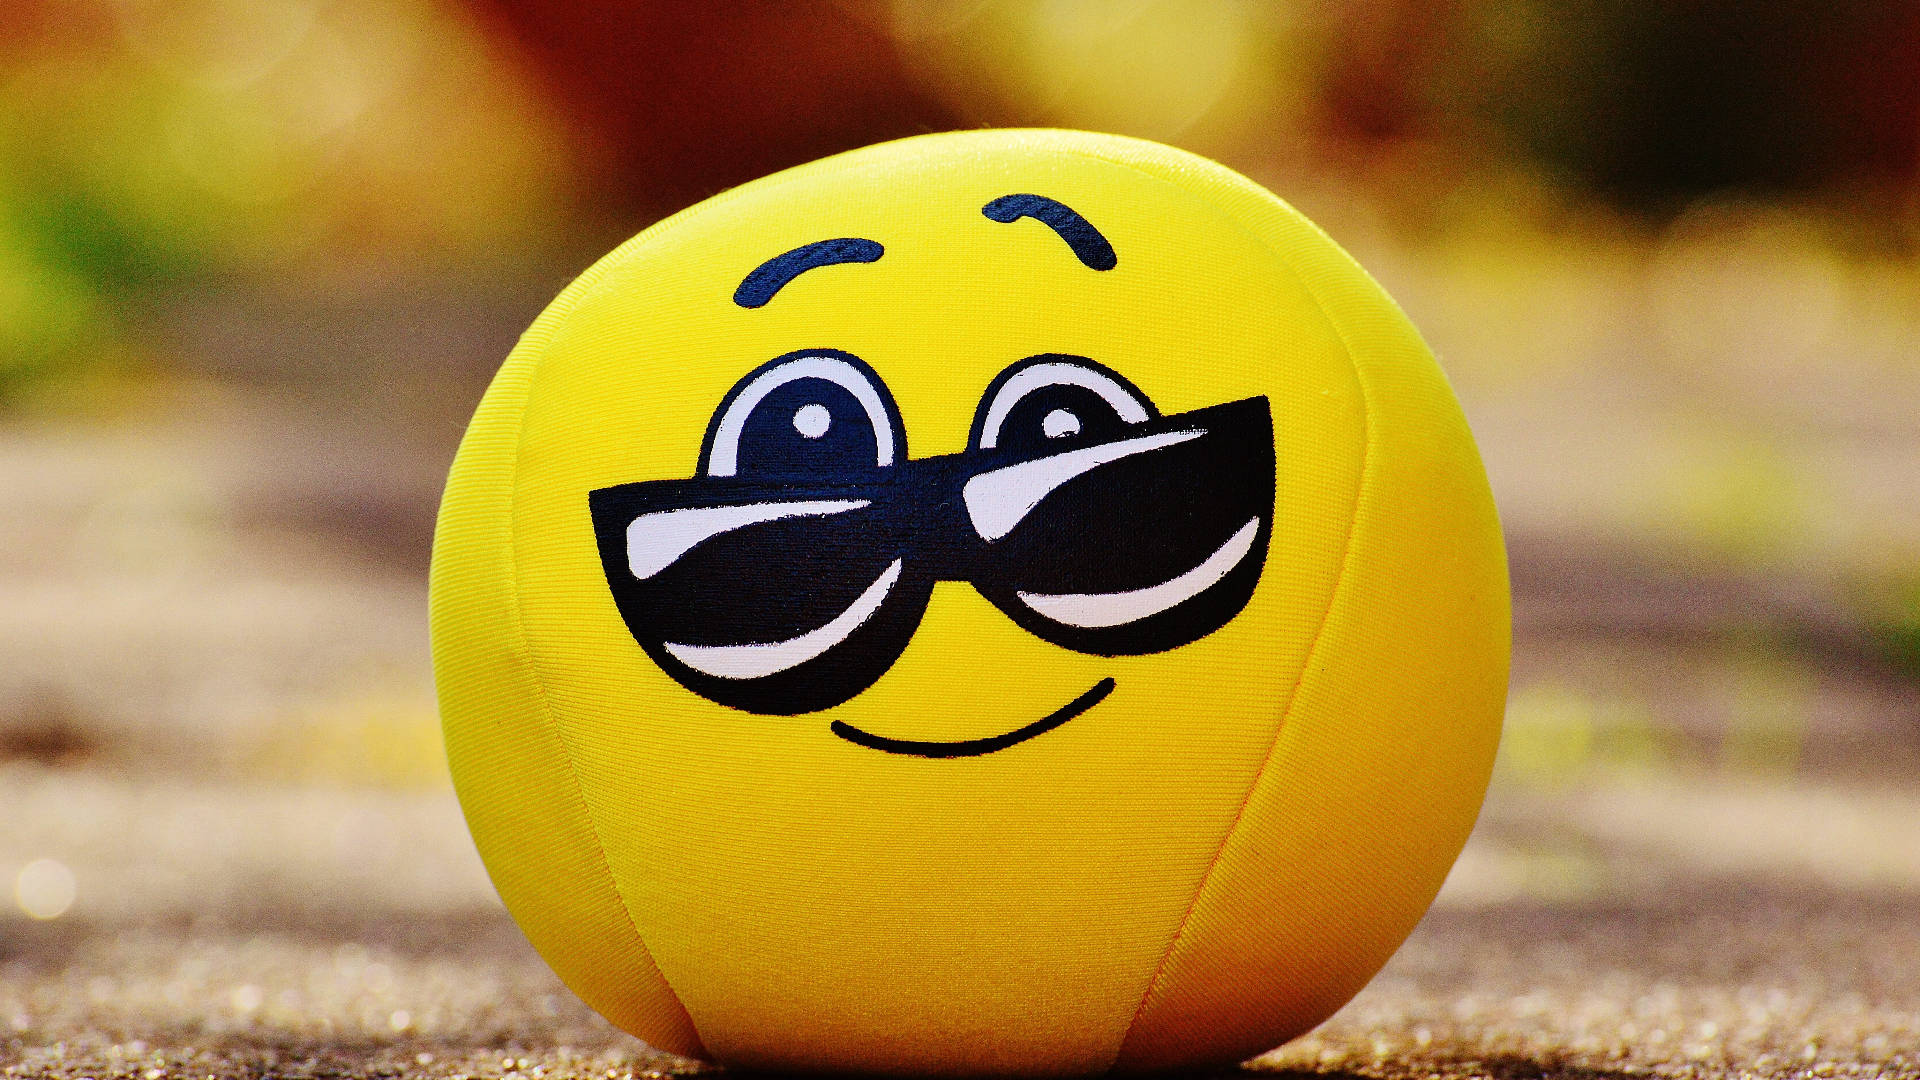 Cool Cute Yellow Emoji Ball Wallpaper